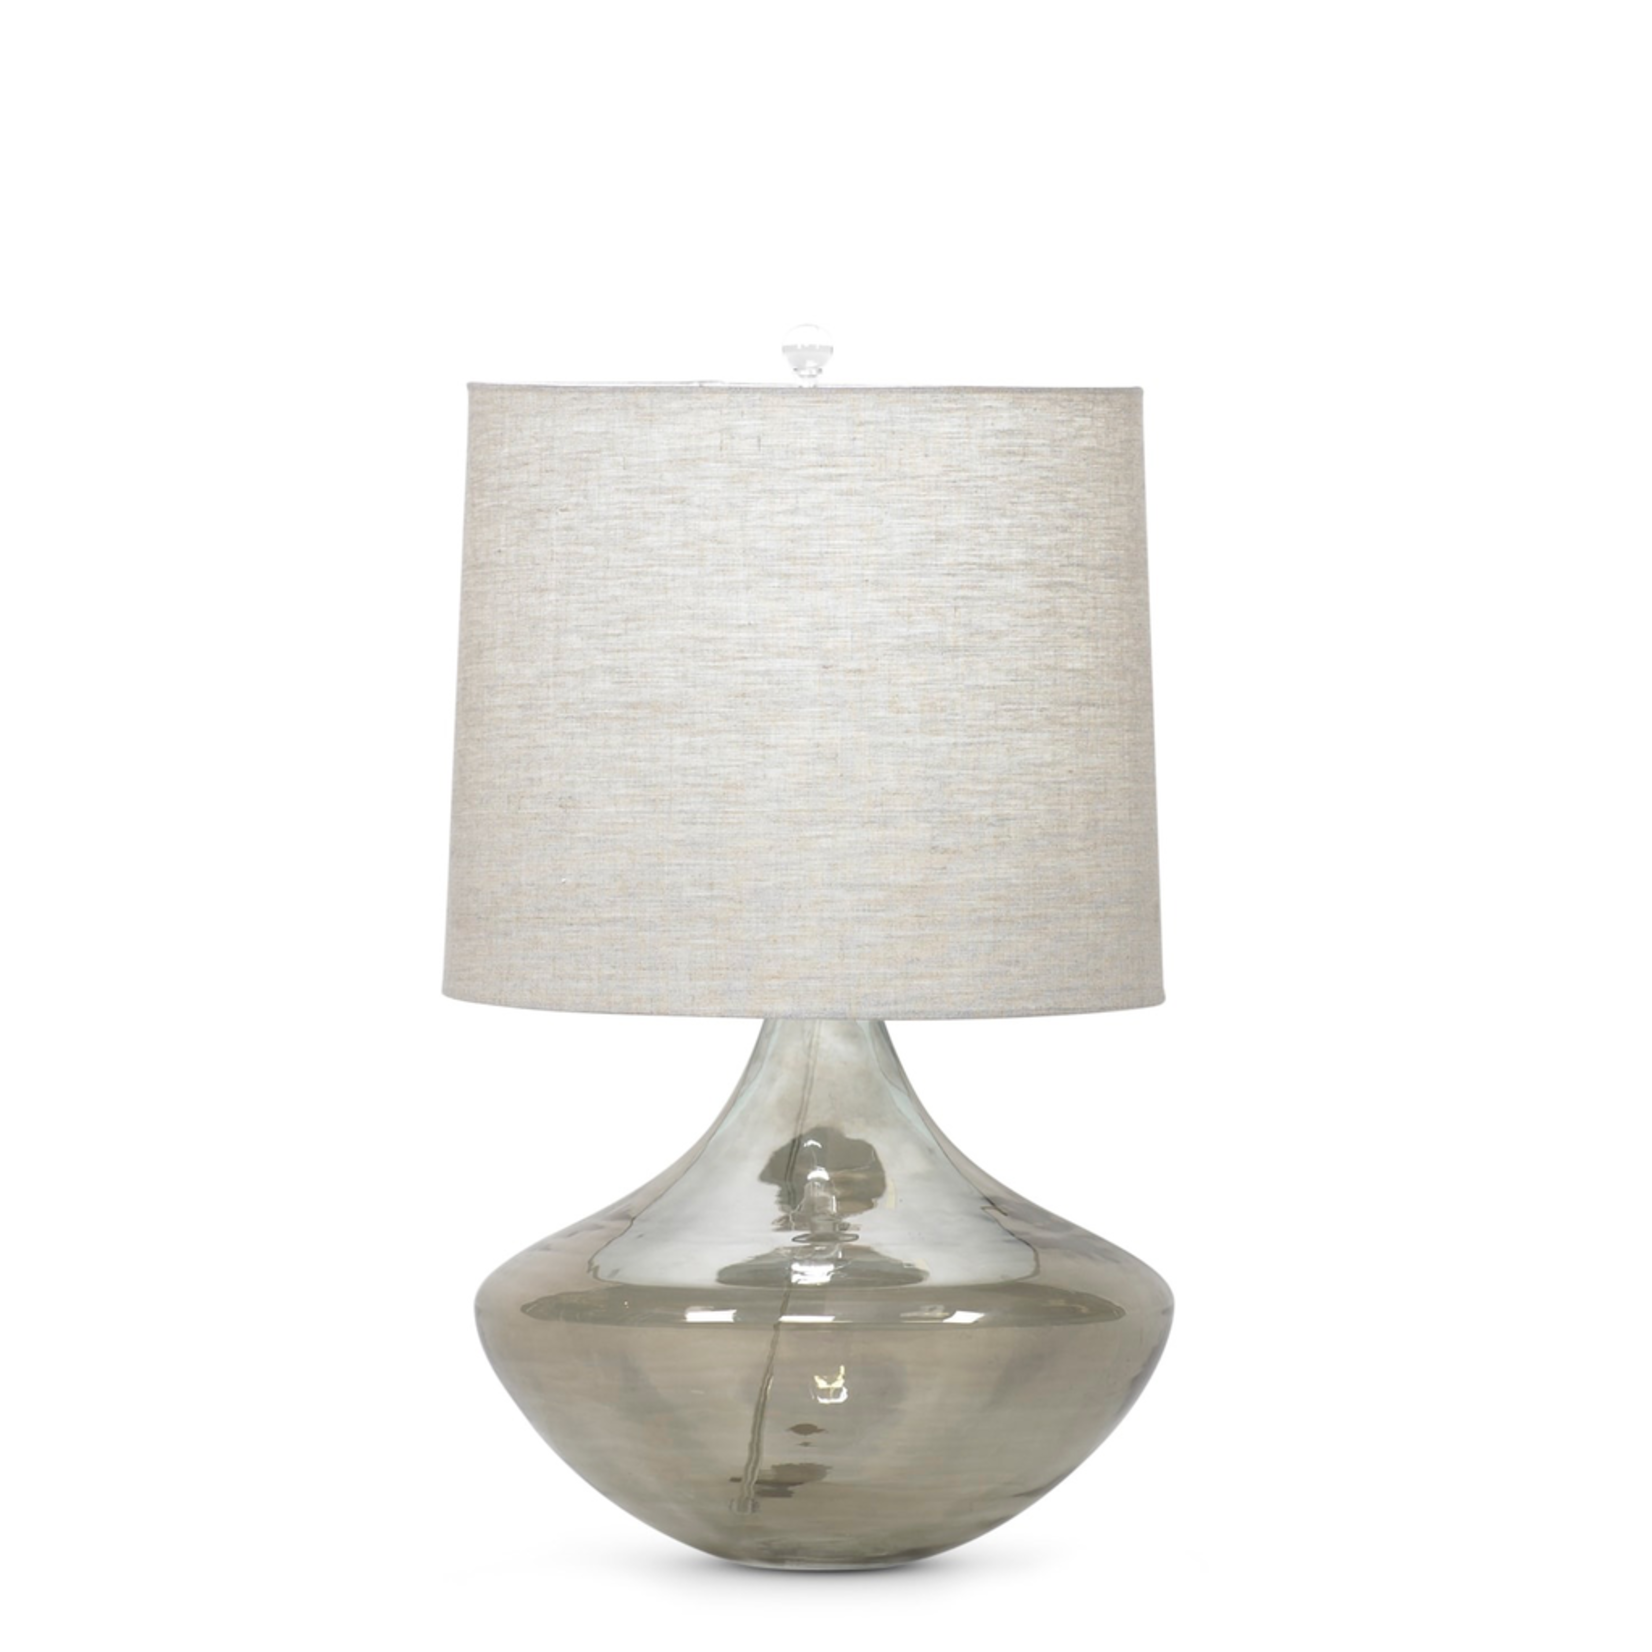 Flow Decor Cabernet Table Lamp - Off White Linen Shade